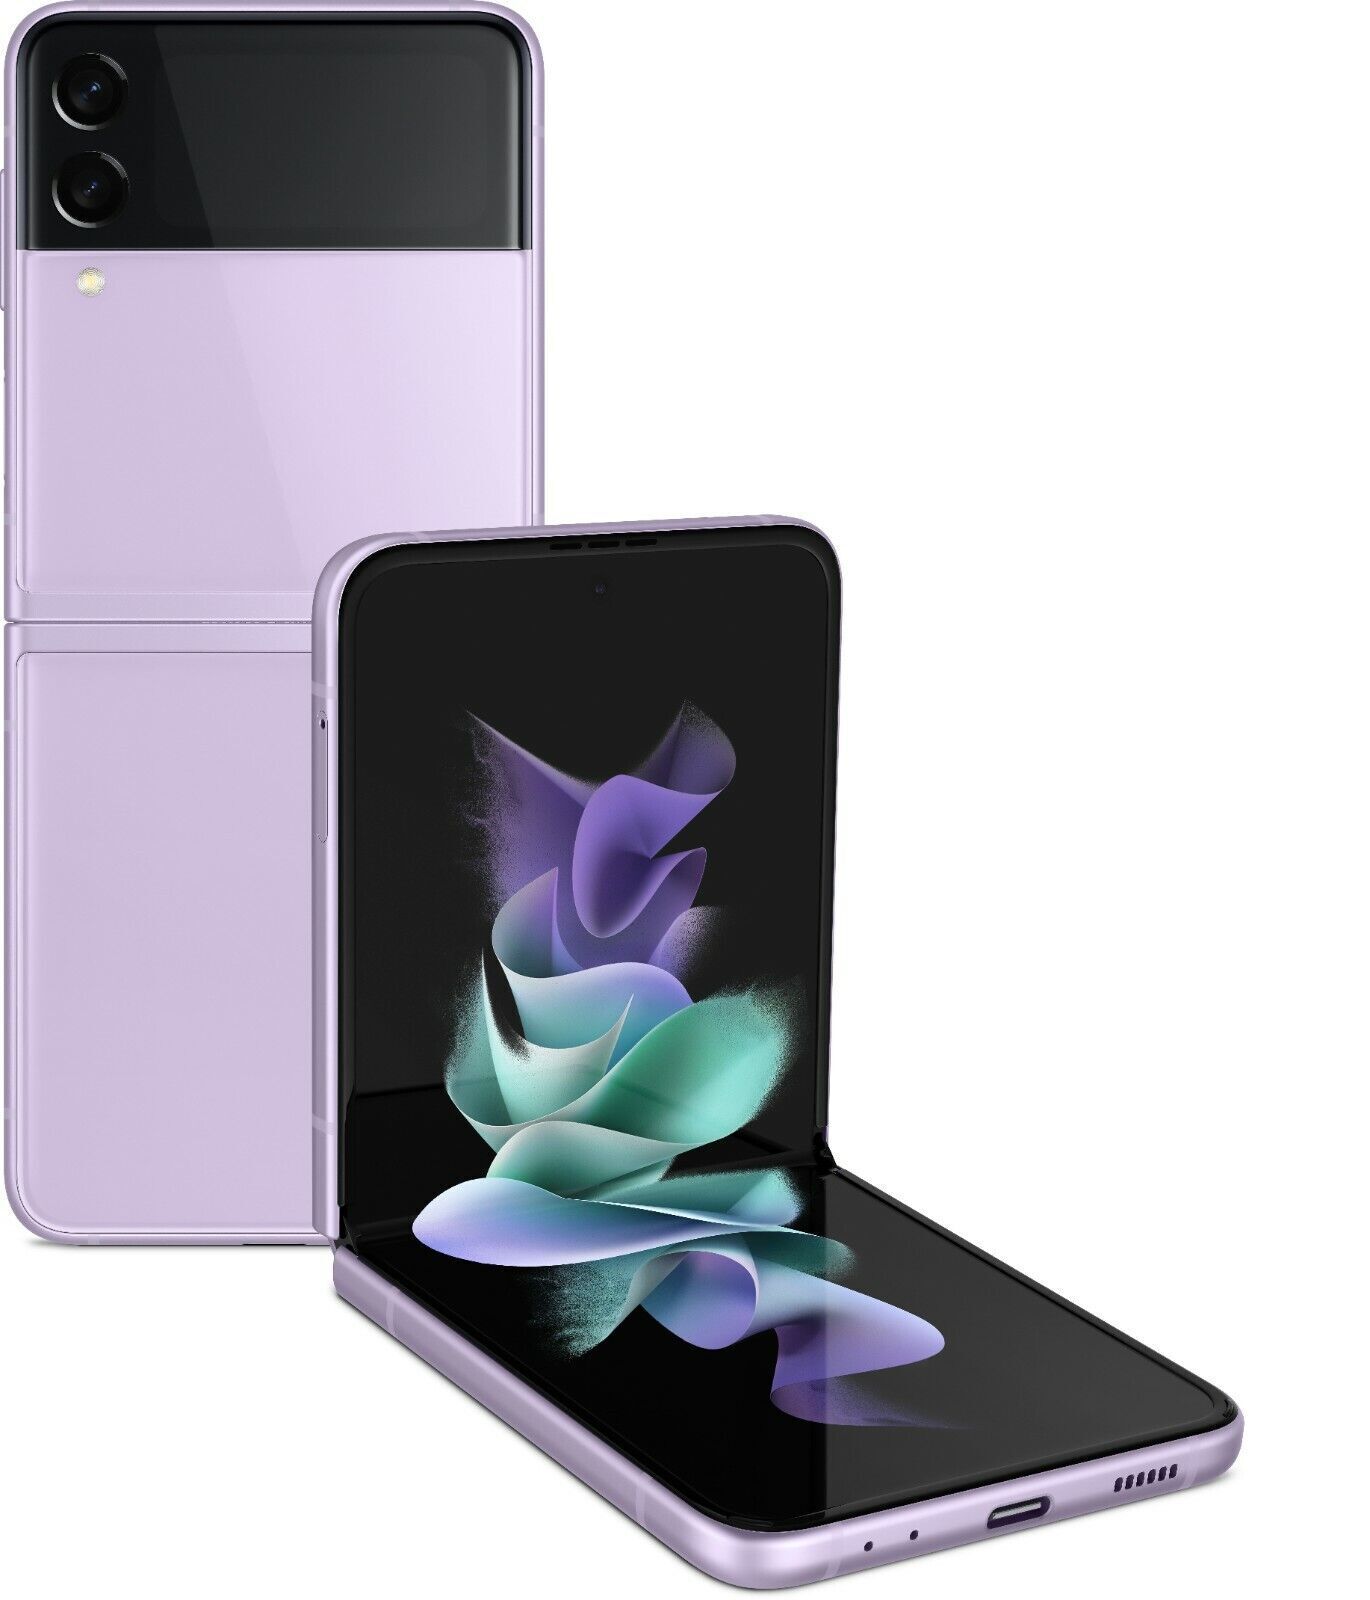 Samsung Galaxy Z Flip 3 5G SM-F711U1 256GB Purple (US Model) - Factory Unlocked Cell Phone - Very Good Condition - image 3 of 3